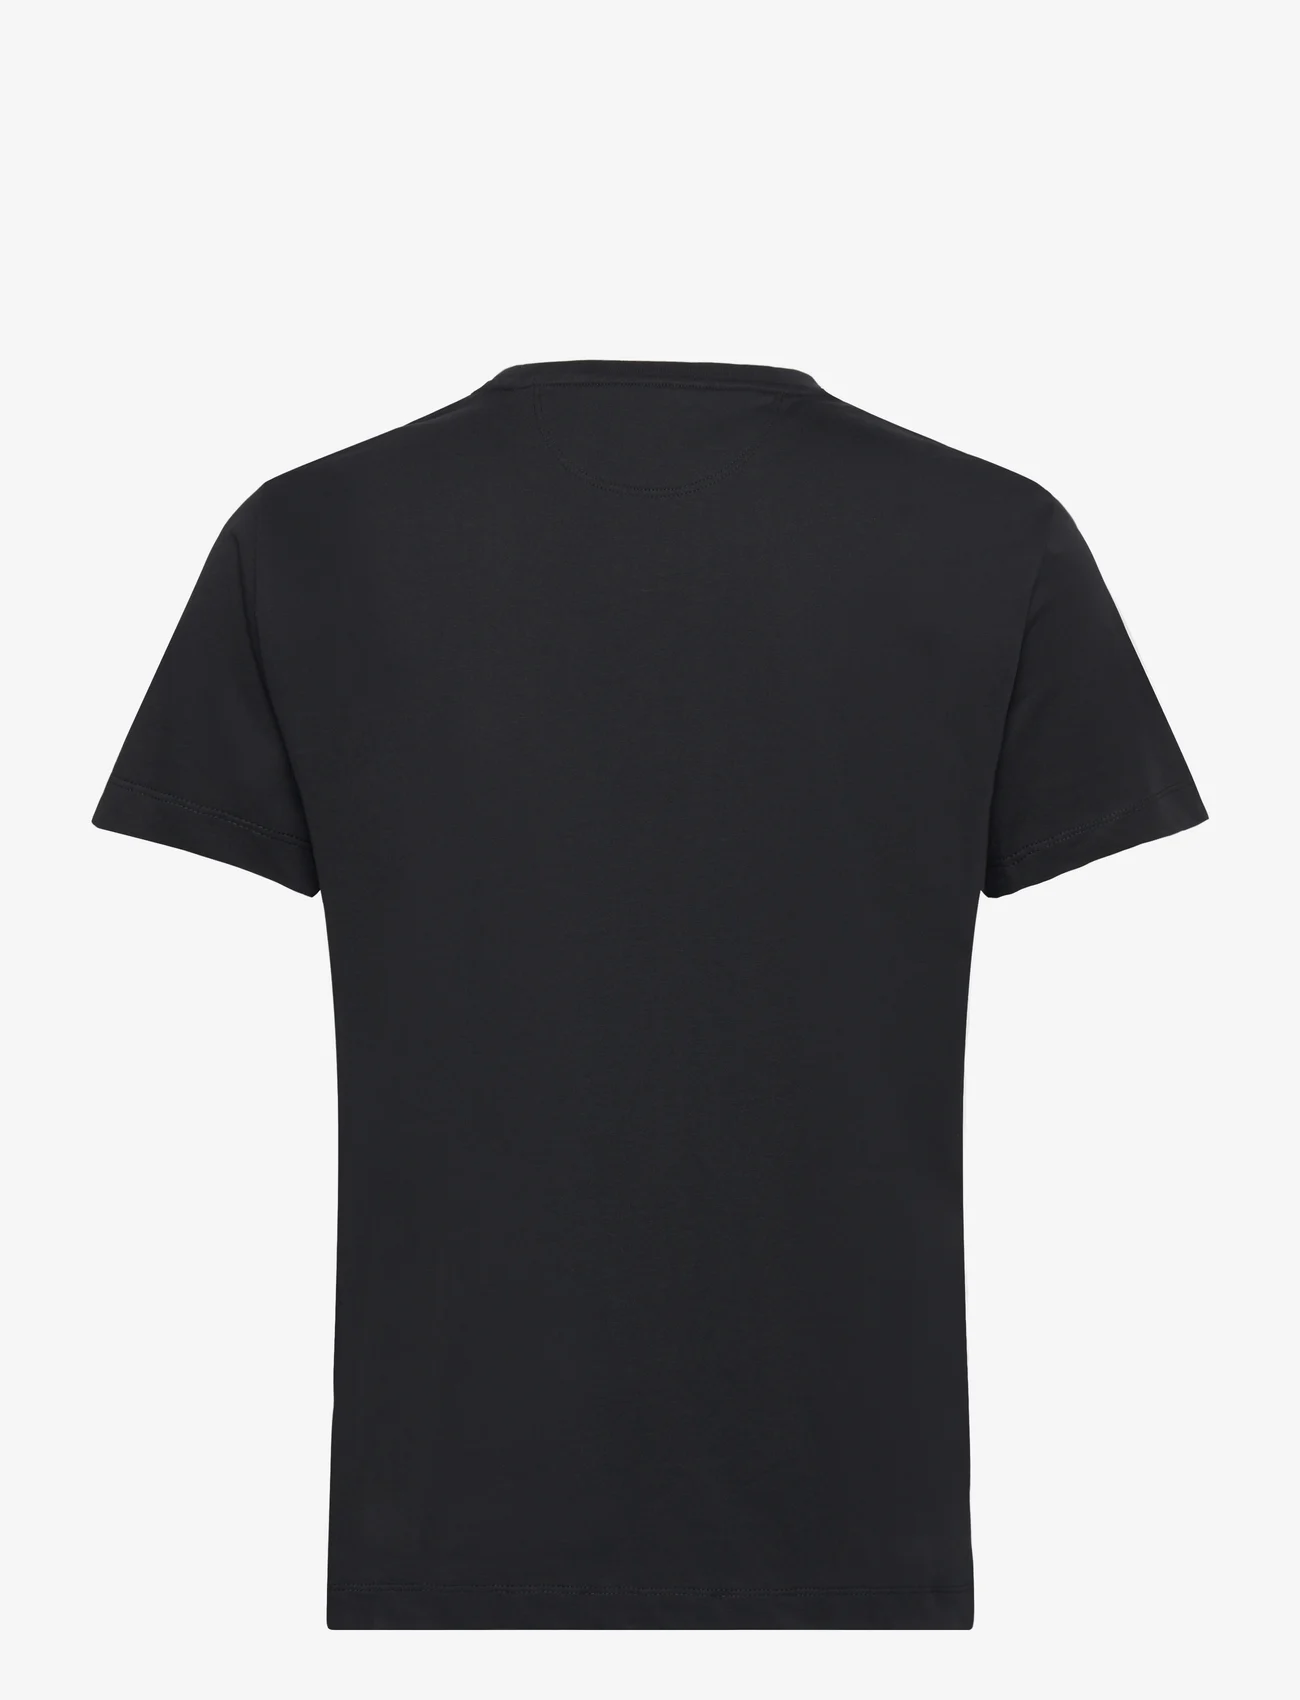 Hackett London - PIMA COTTON TEE - basic t-shirts - black - 1